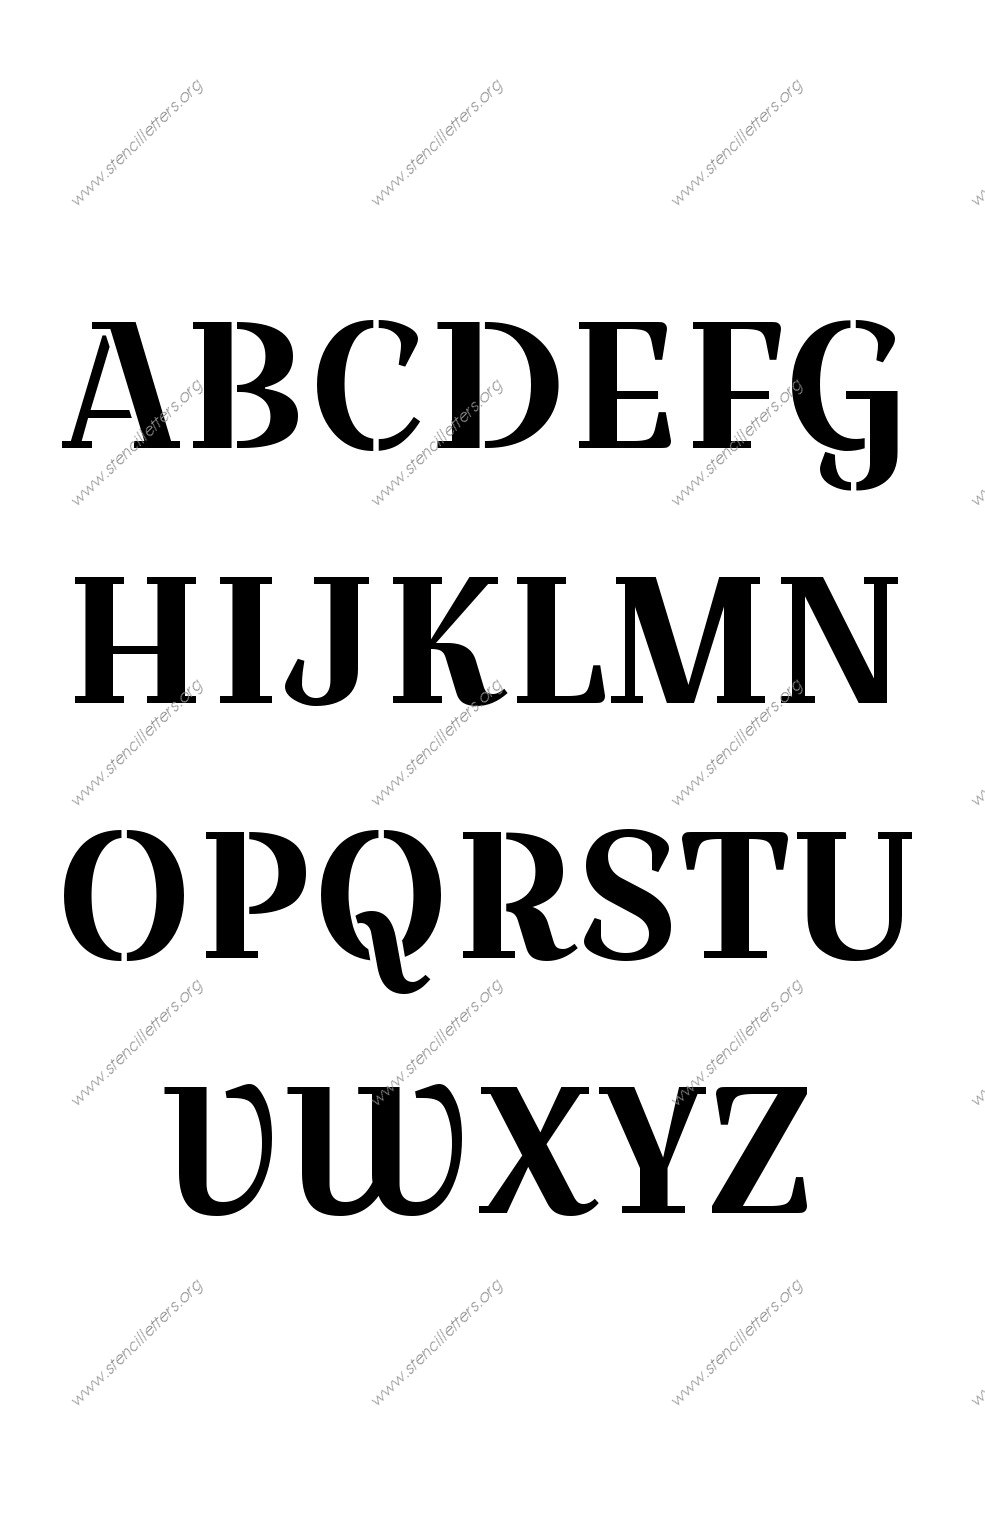 Wedding Script A to Z alphabet stencils